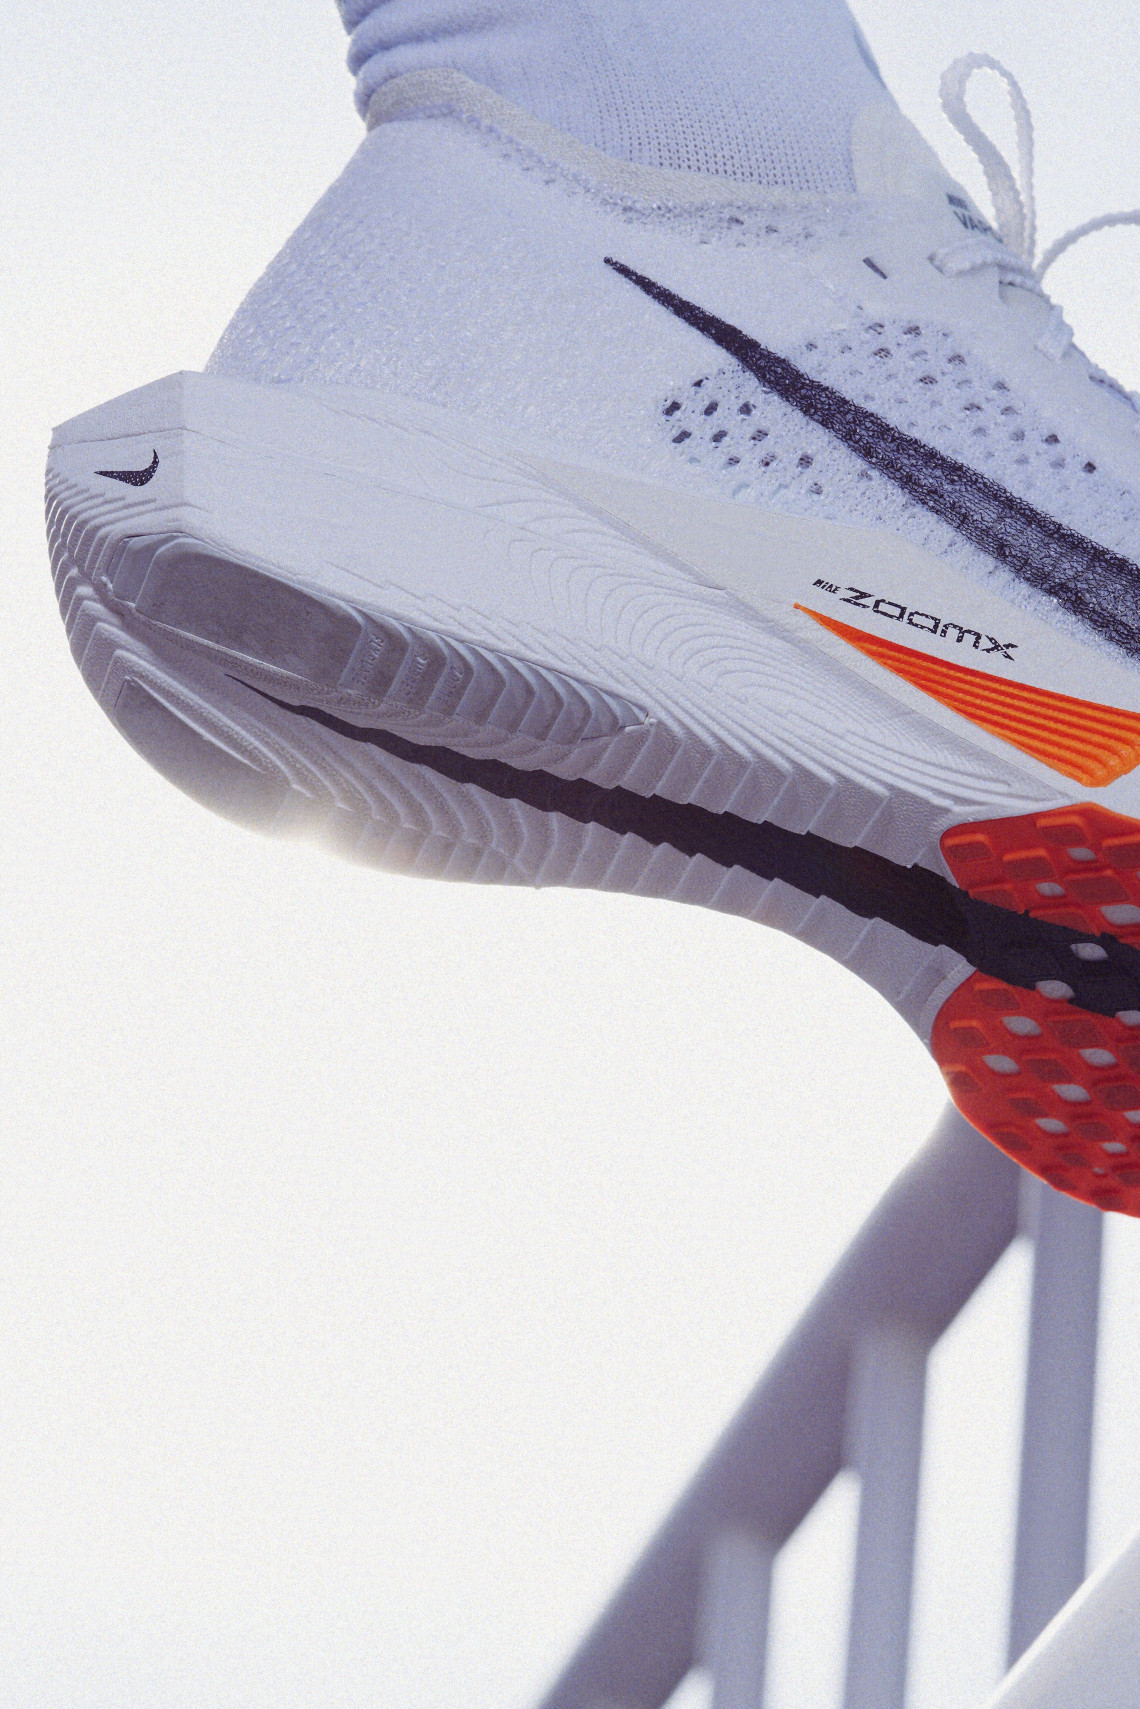 Nike ZoomX Vaporfly 3 Raceday Shoes Release Date | Sneaker News